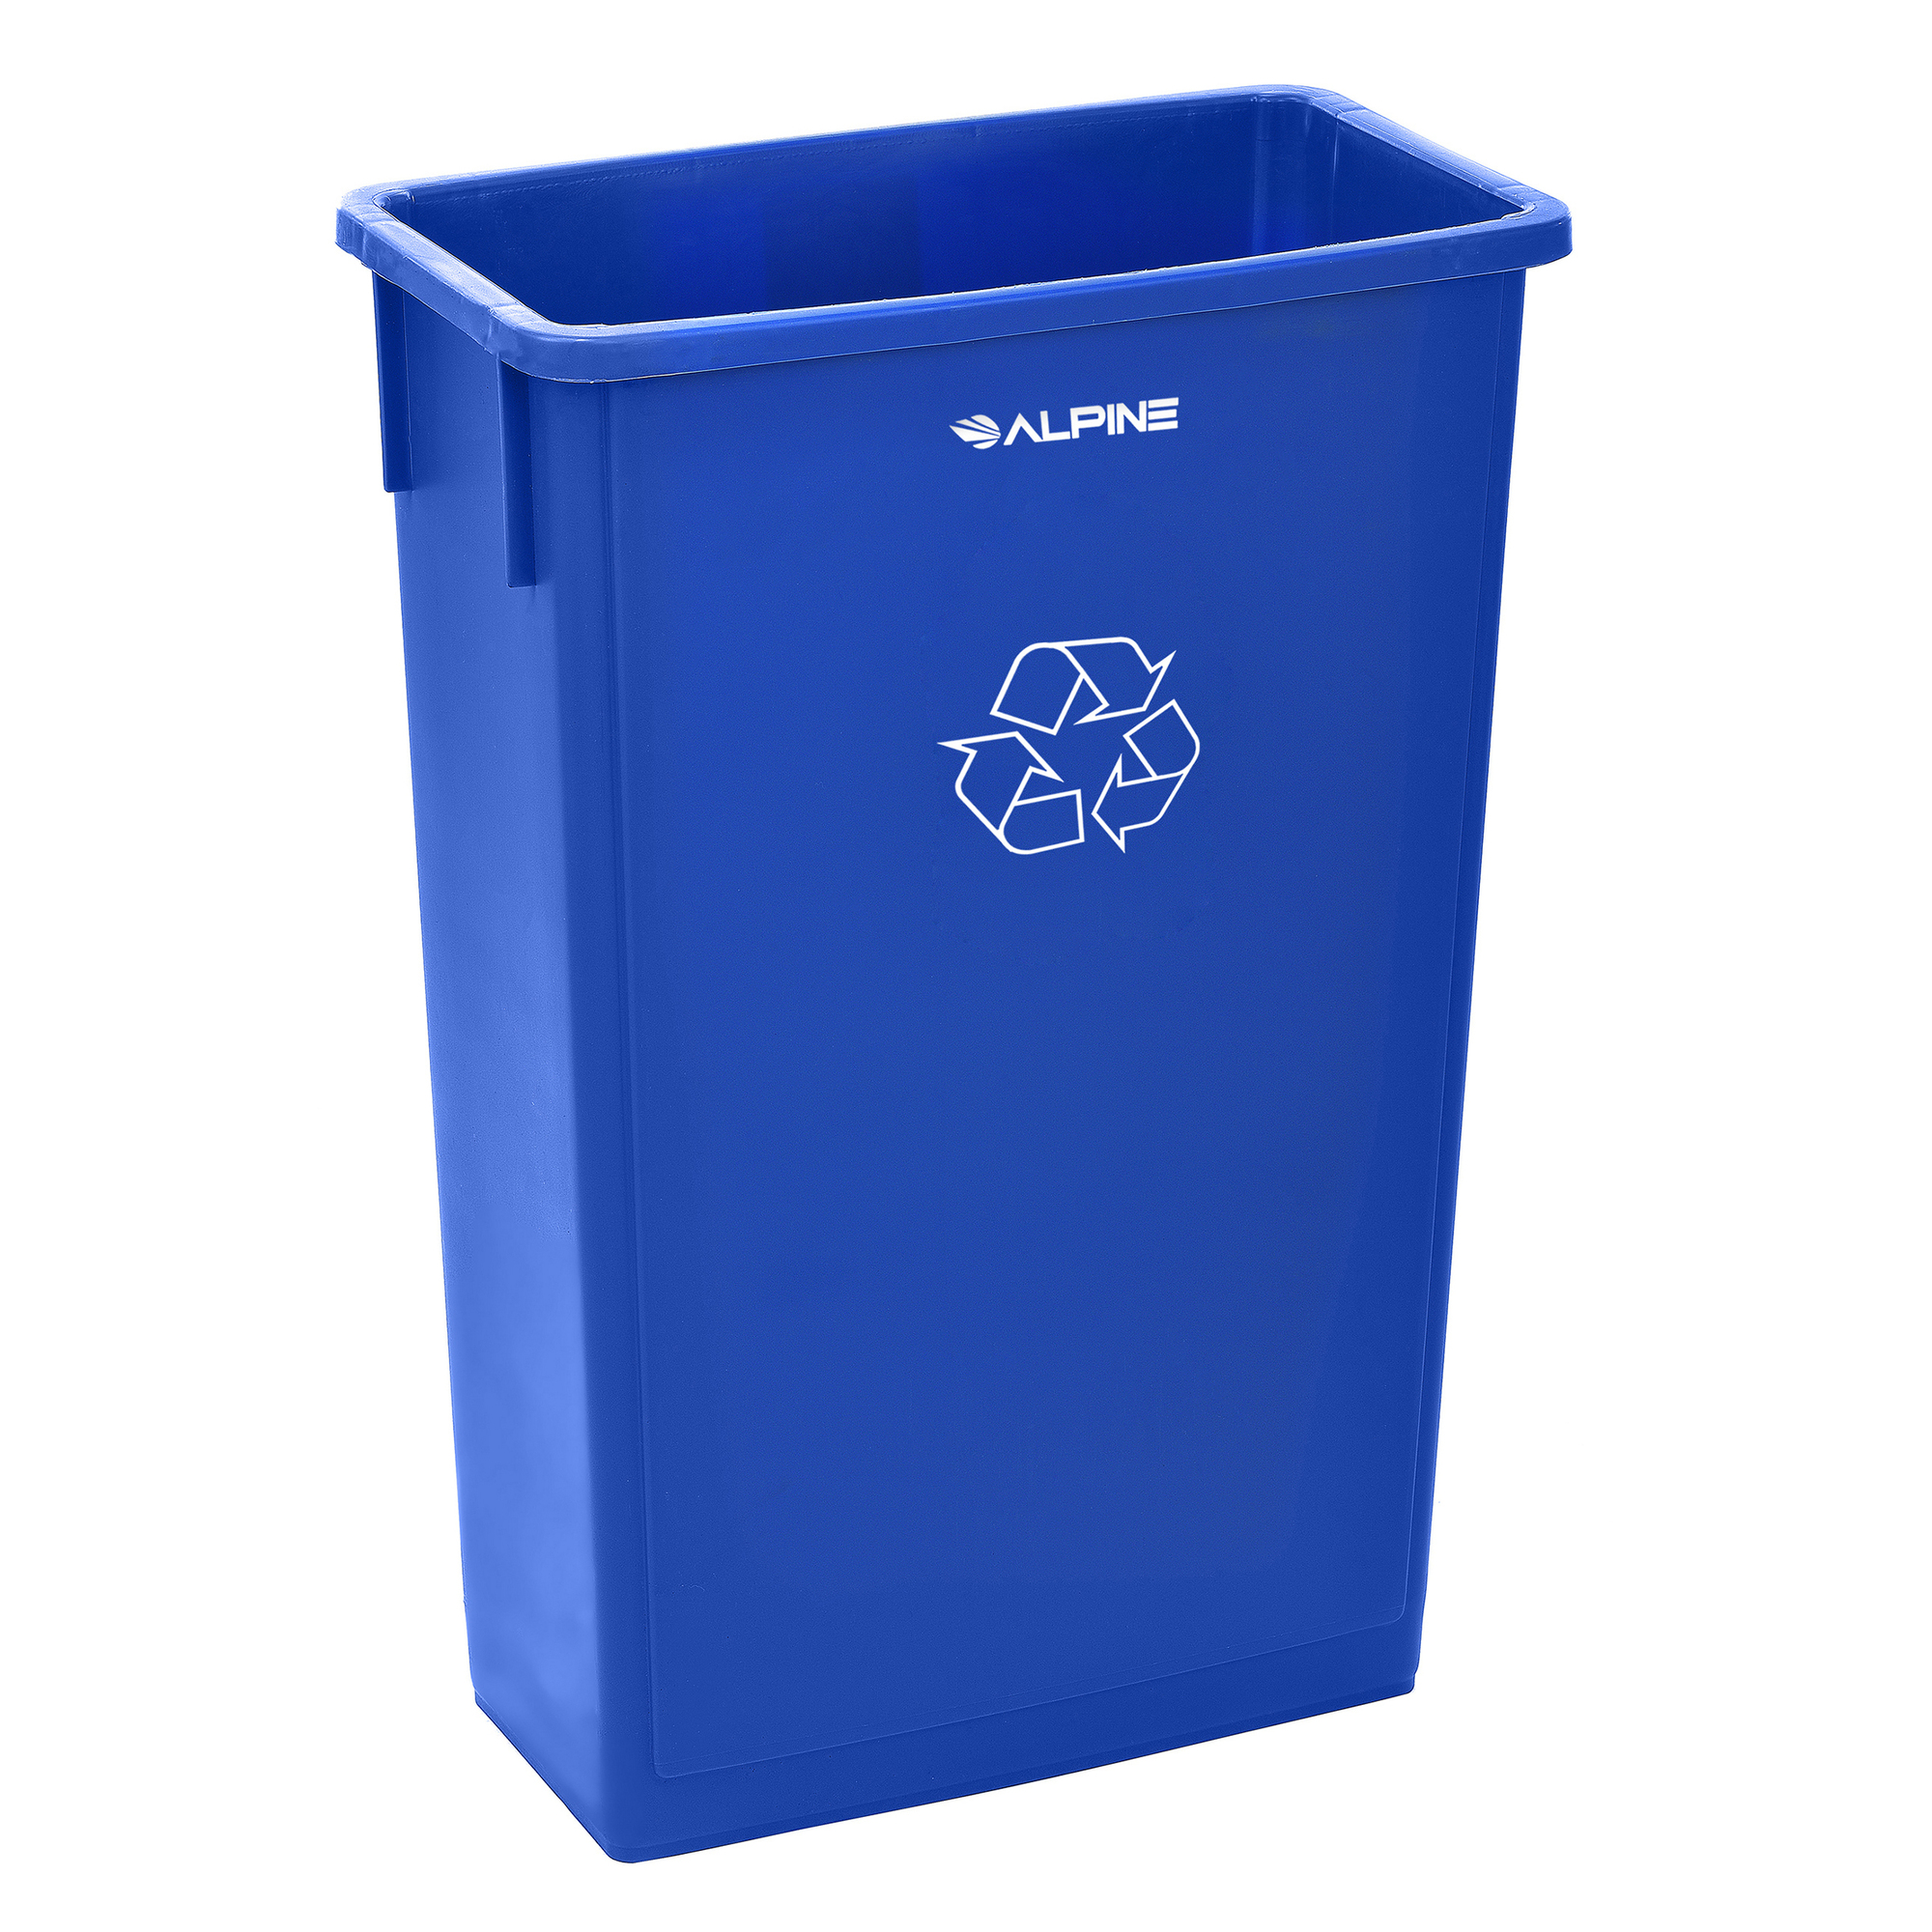 Alpine, Slim 23 Gallon Blue Recycling Trash Can Bin, Capacity 23 Gal, Model ALP477-R-BLU